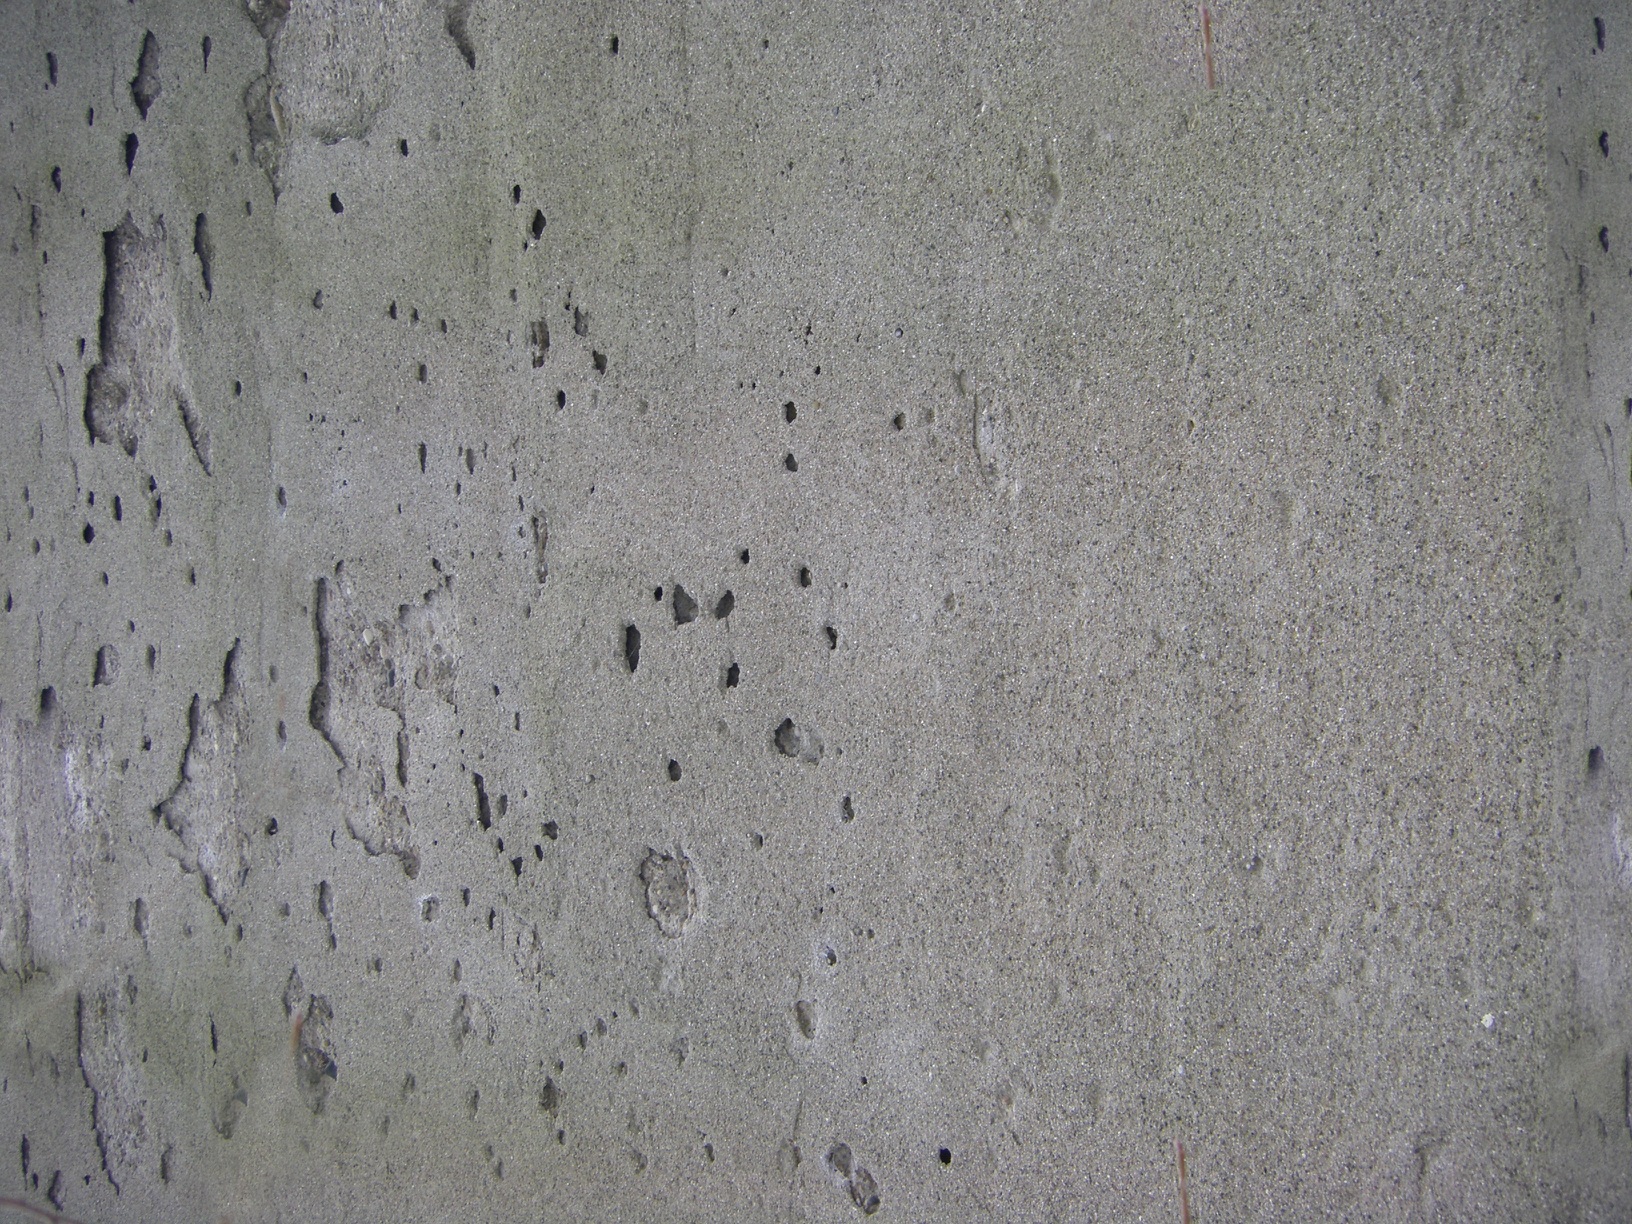 Mossy Concrete 2.